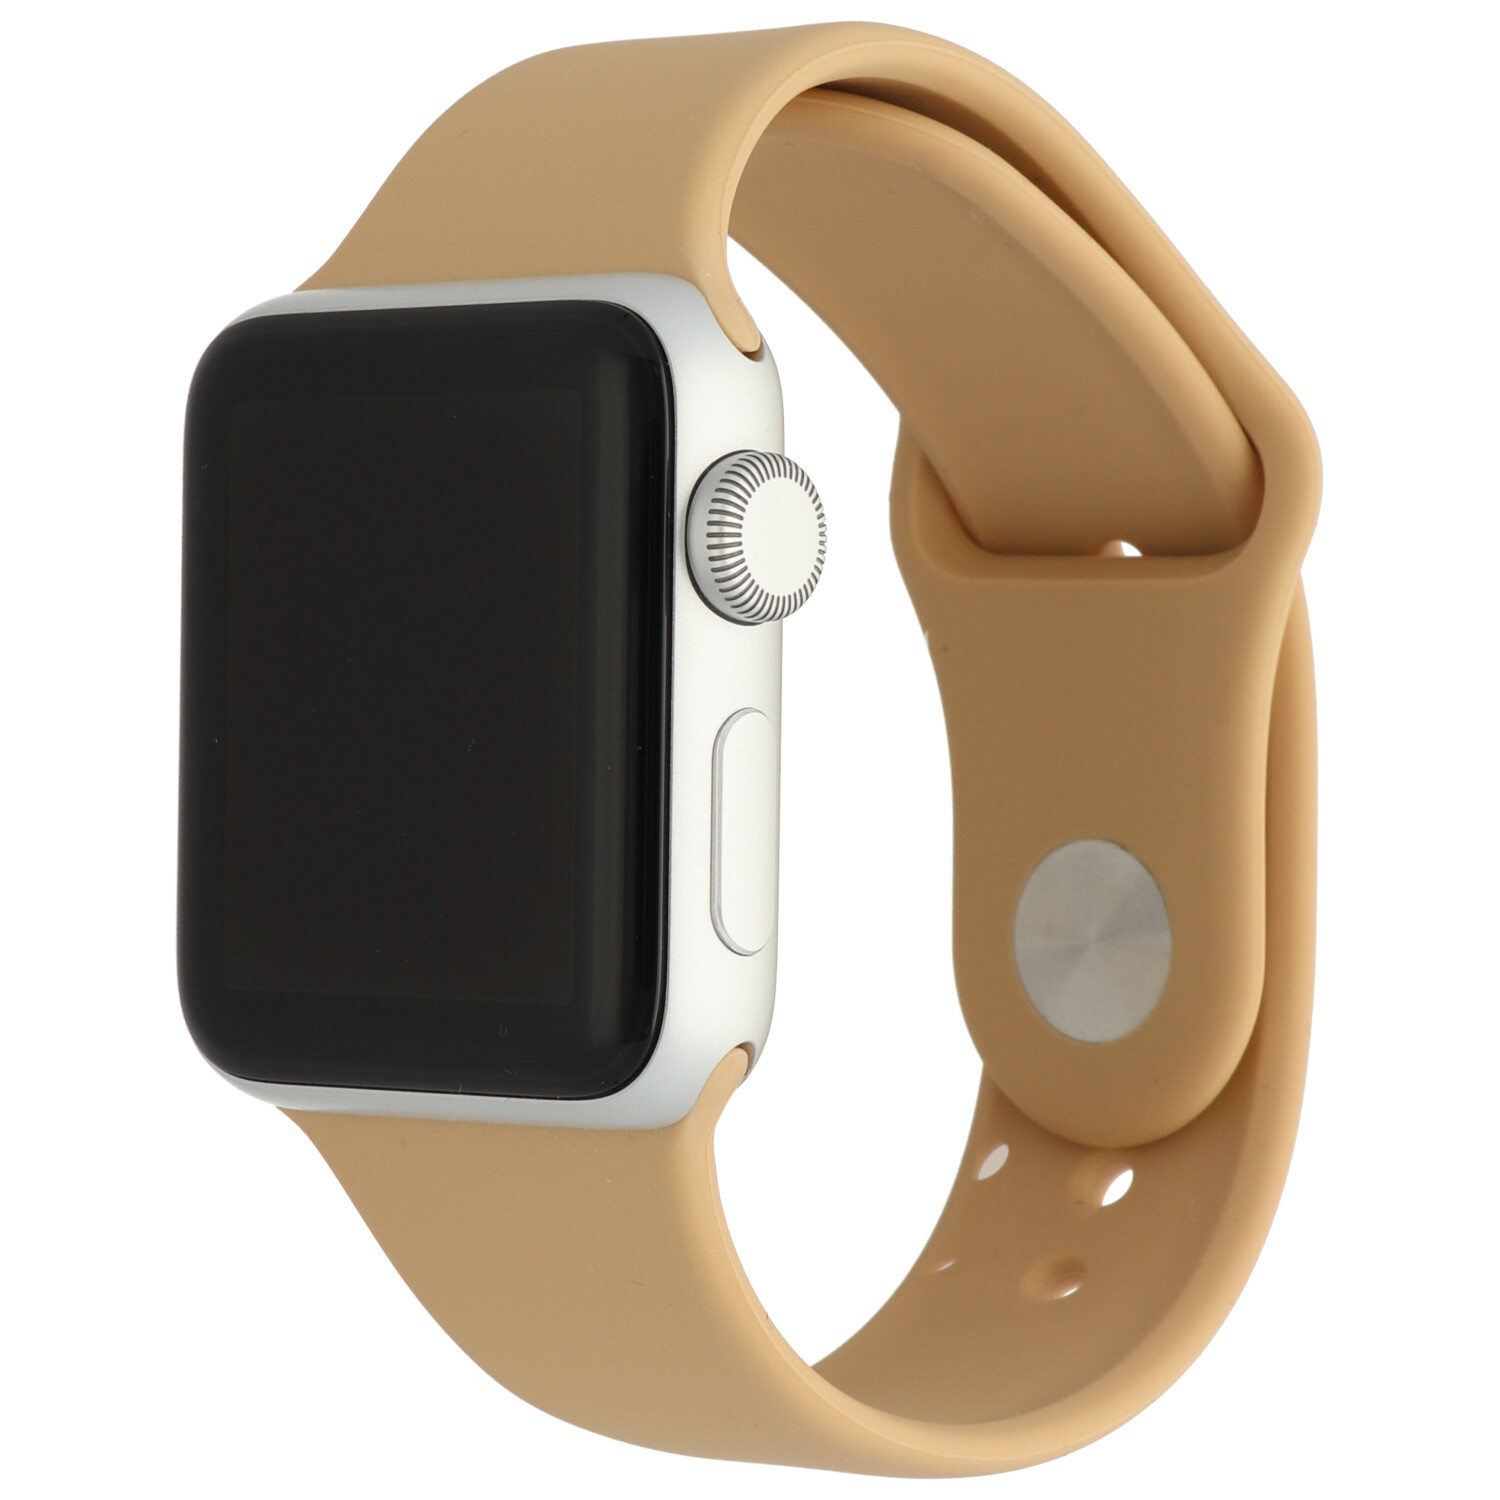 Cinturino sport per Apple Watch - noce